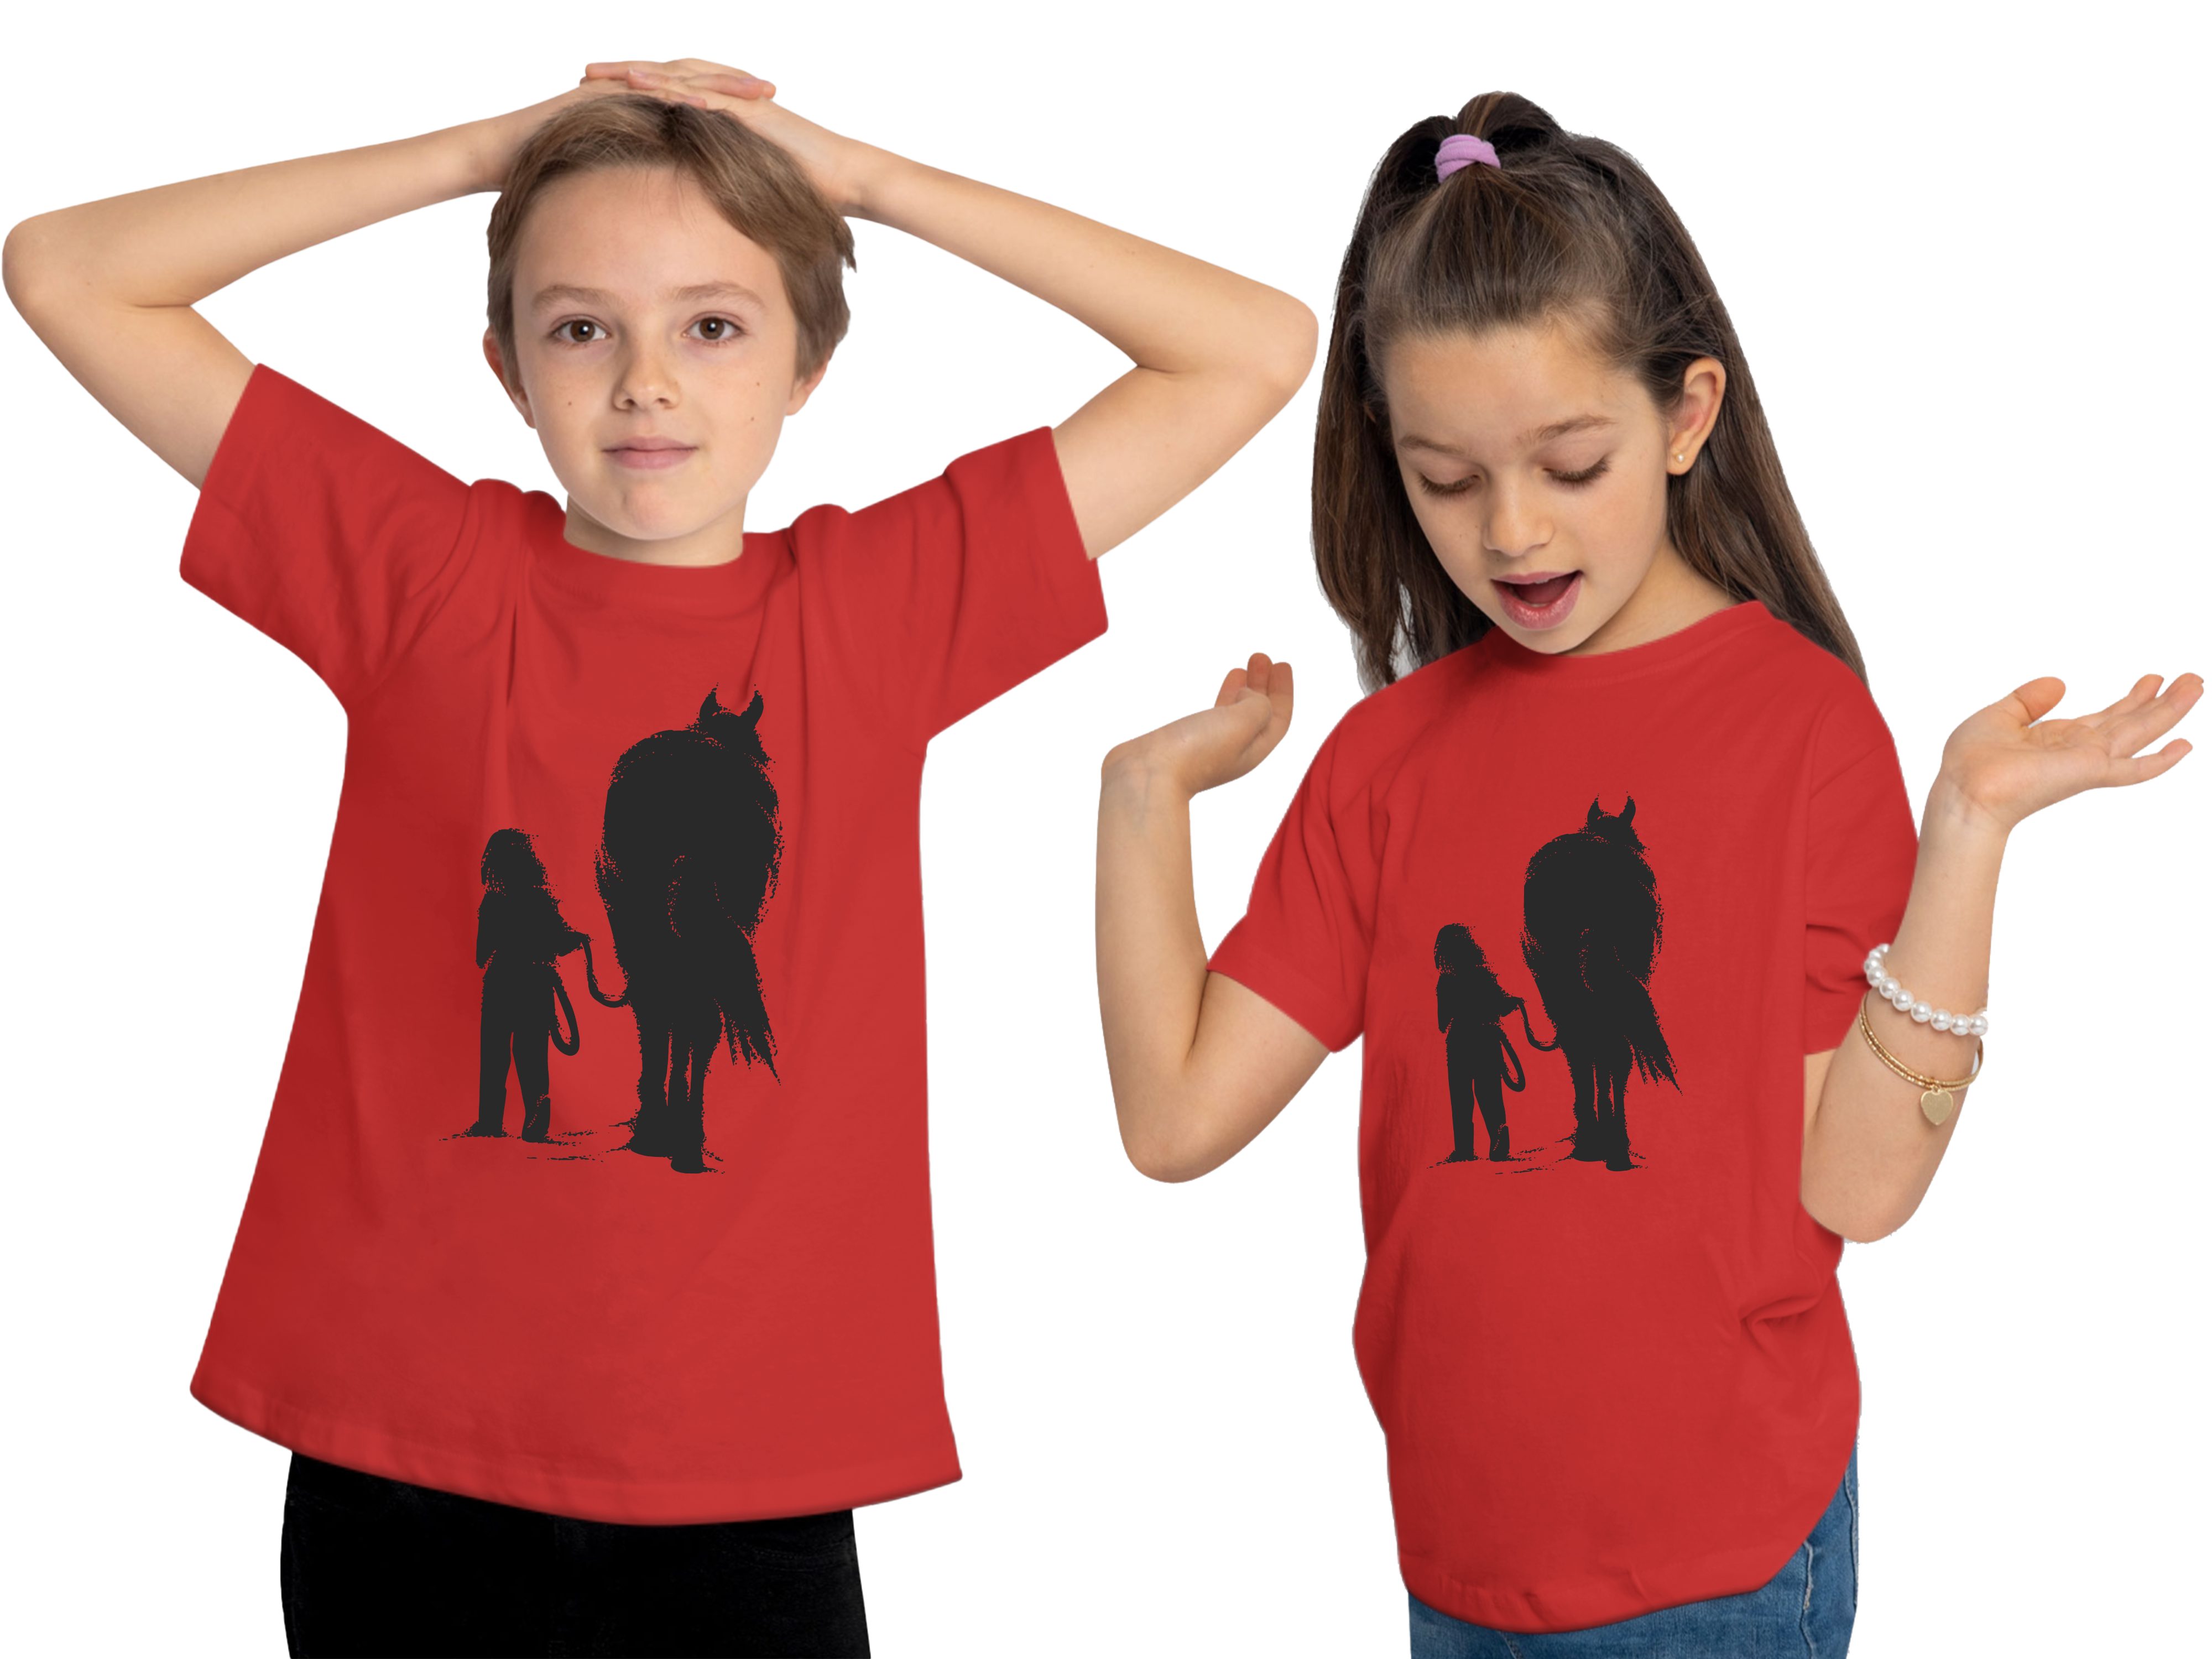 - & Spaziergang mit Kinder rot bedruckt Pferd Aufdruck, i250 Shirt beim Print T-Shirt MyDesign24 Baumwollshirt Mädchen